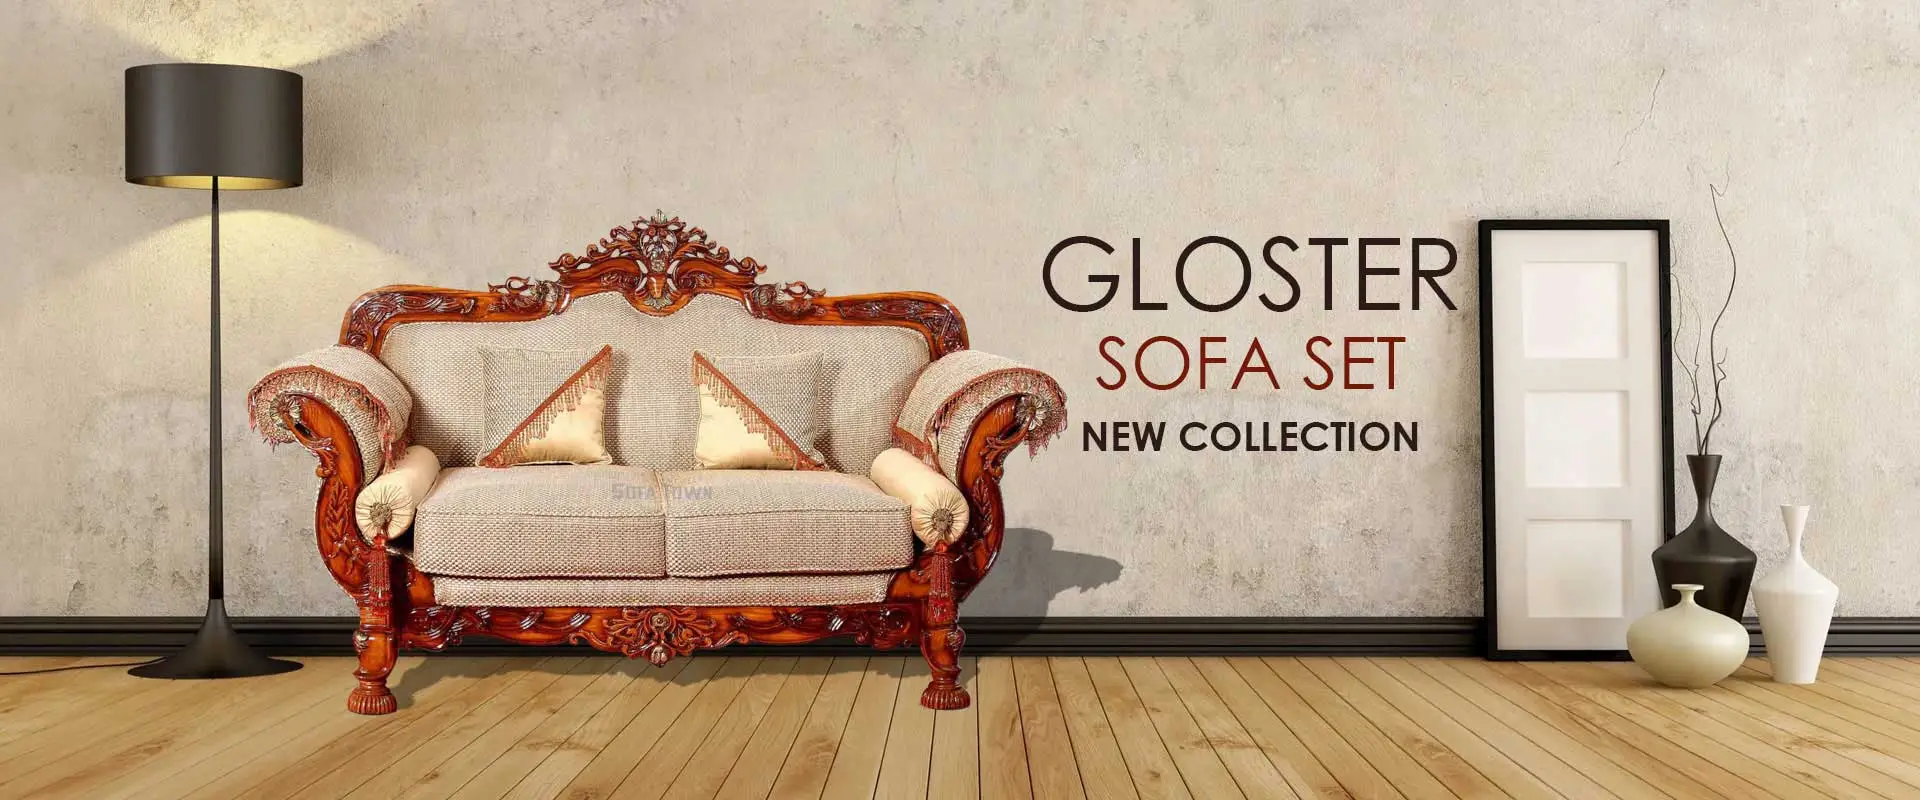 Gloster Sofa Set  Manufacturers in Kollam